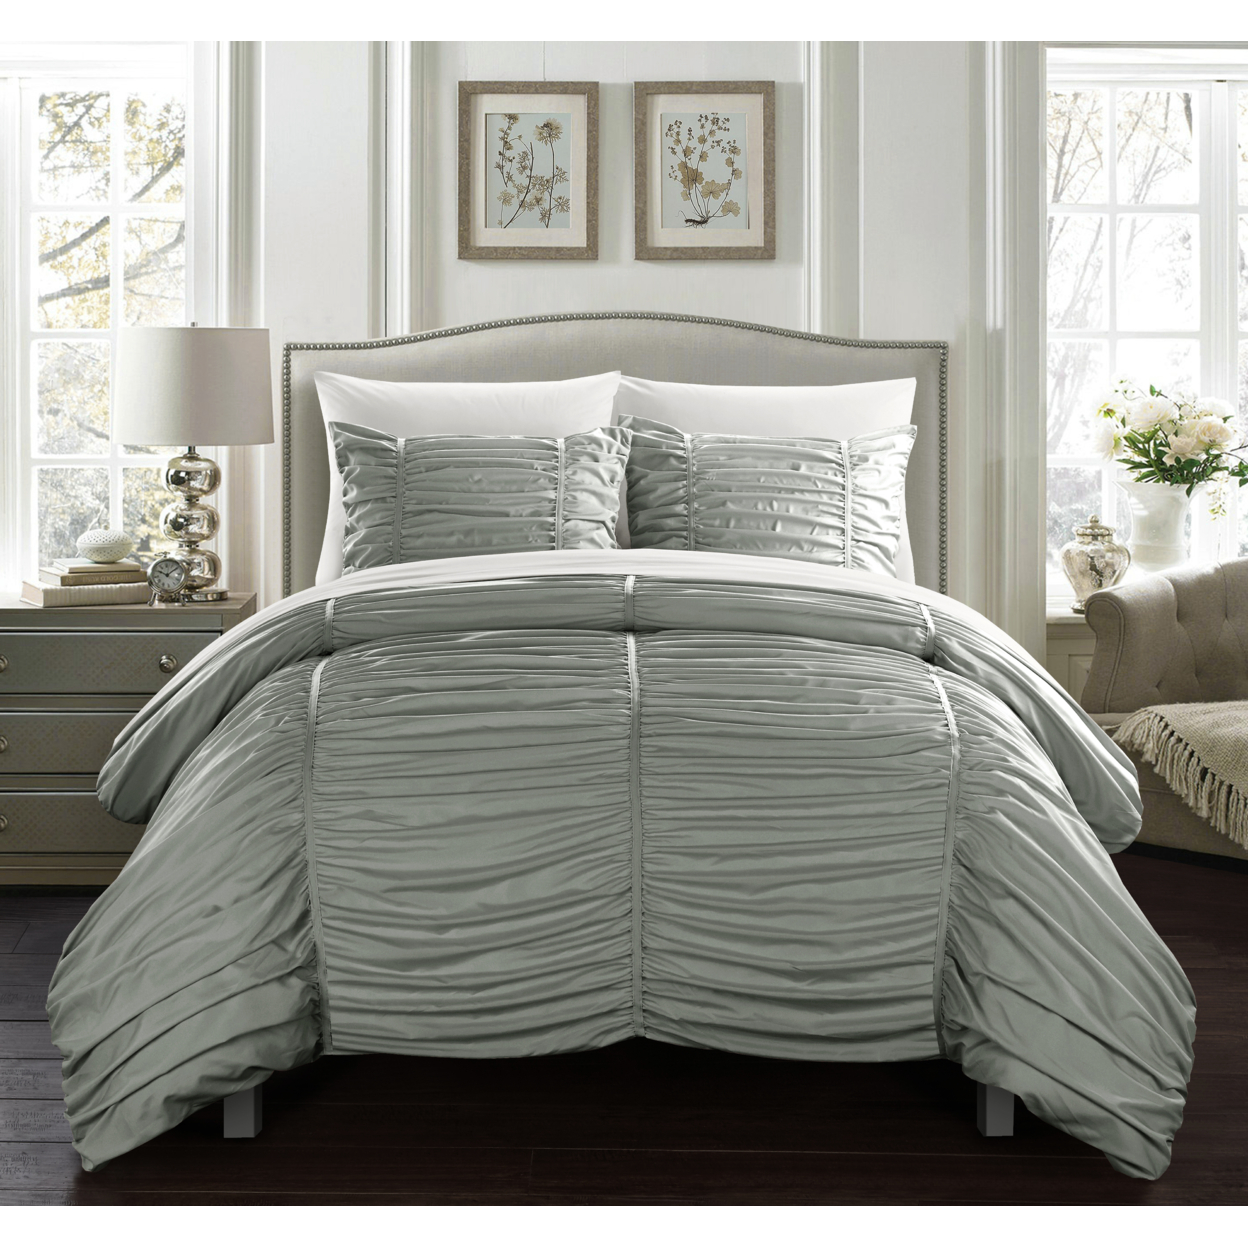 Kiela 2 Pc Or 3 Pc Ruched Comforter Set - Grey, Twin